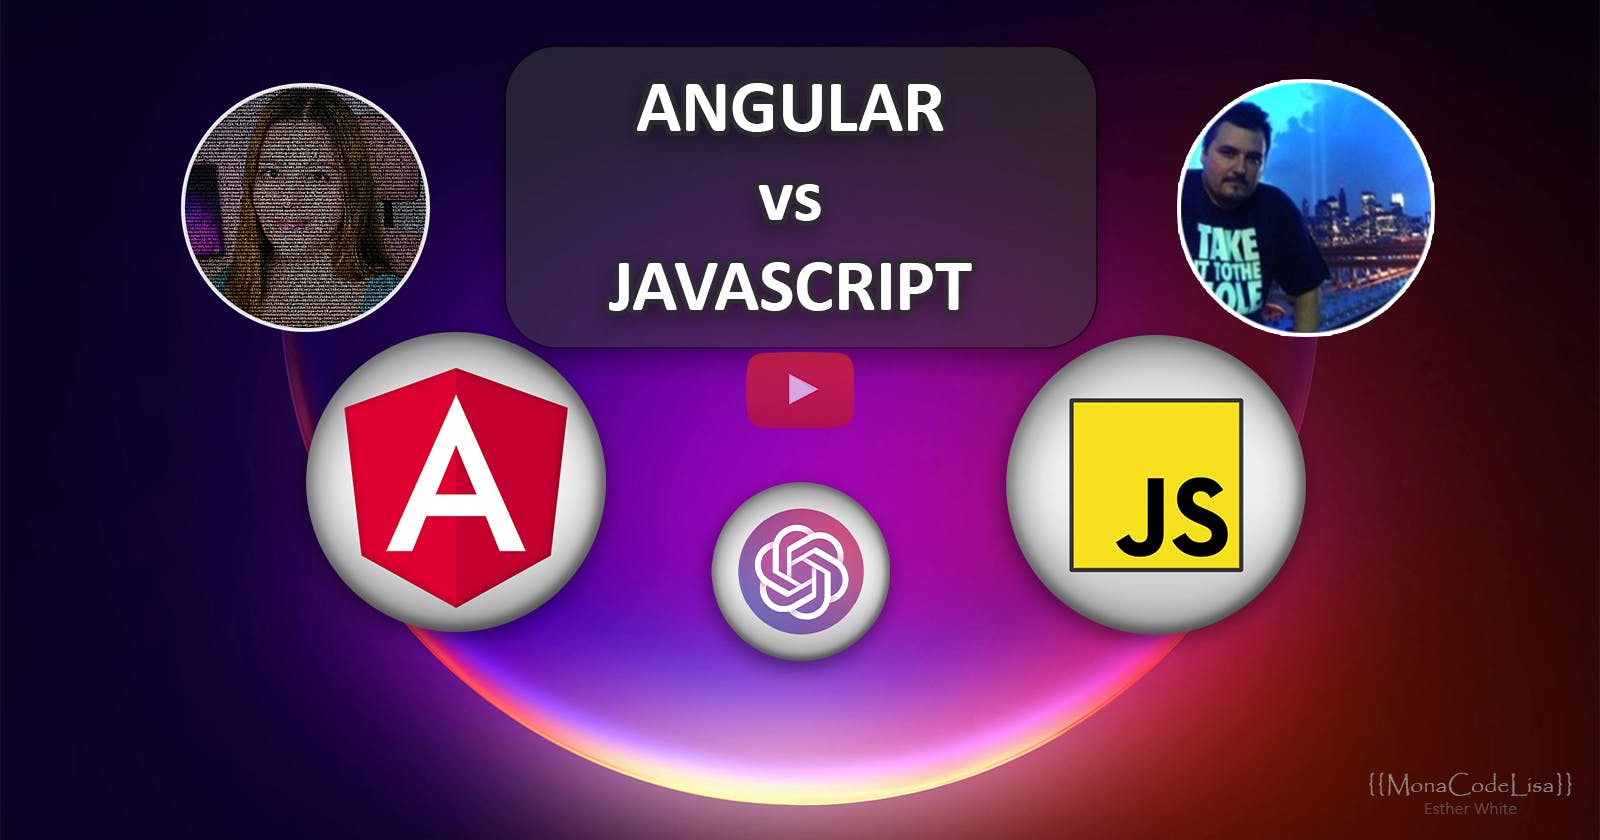 Angular vs Vanilla JavaScript - Job Interview Coding Project